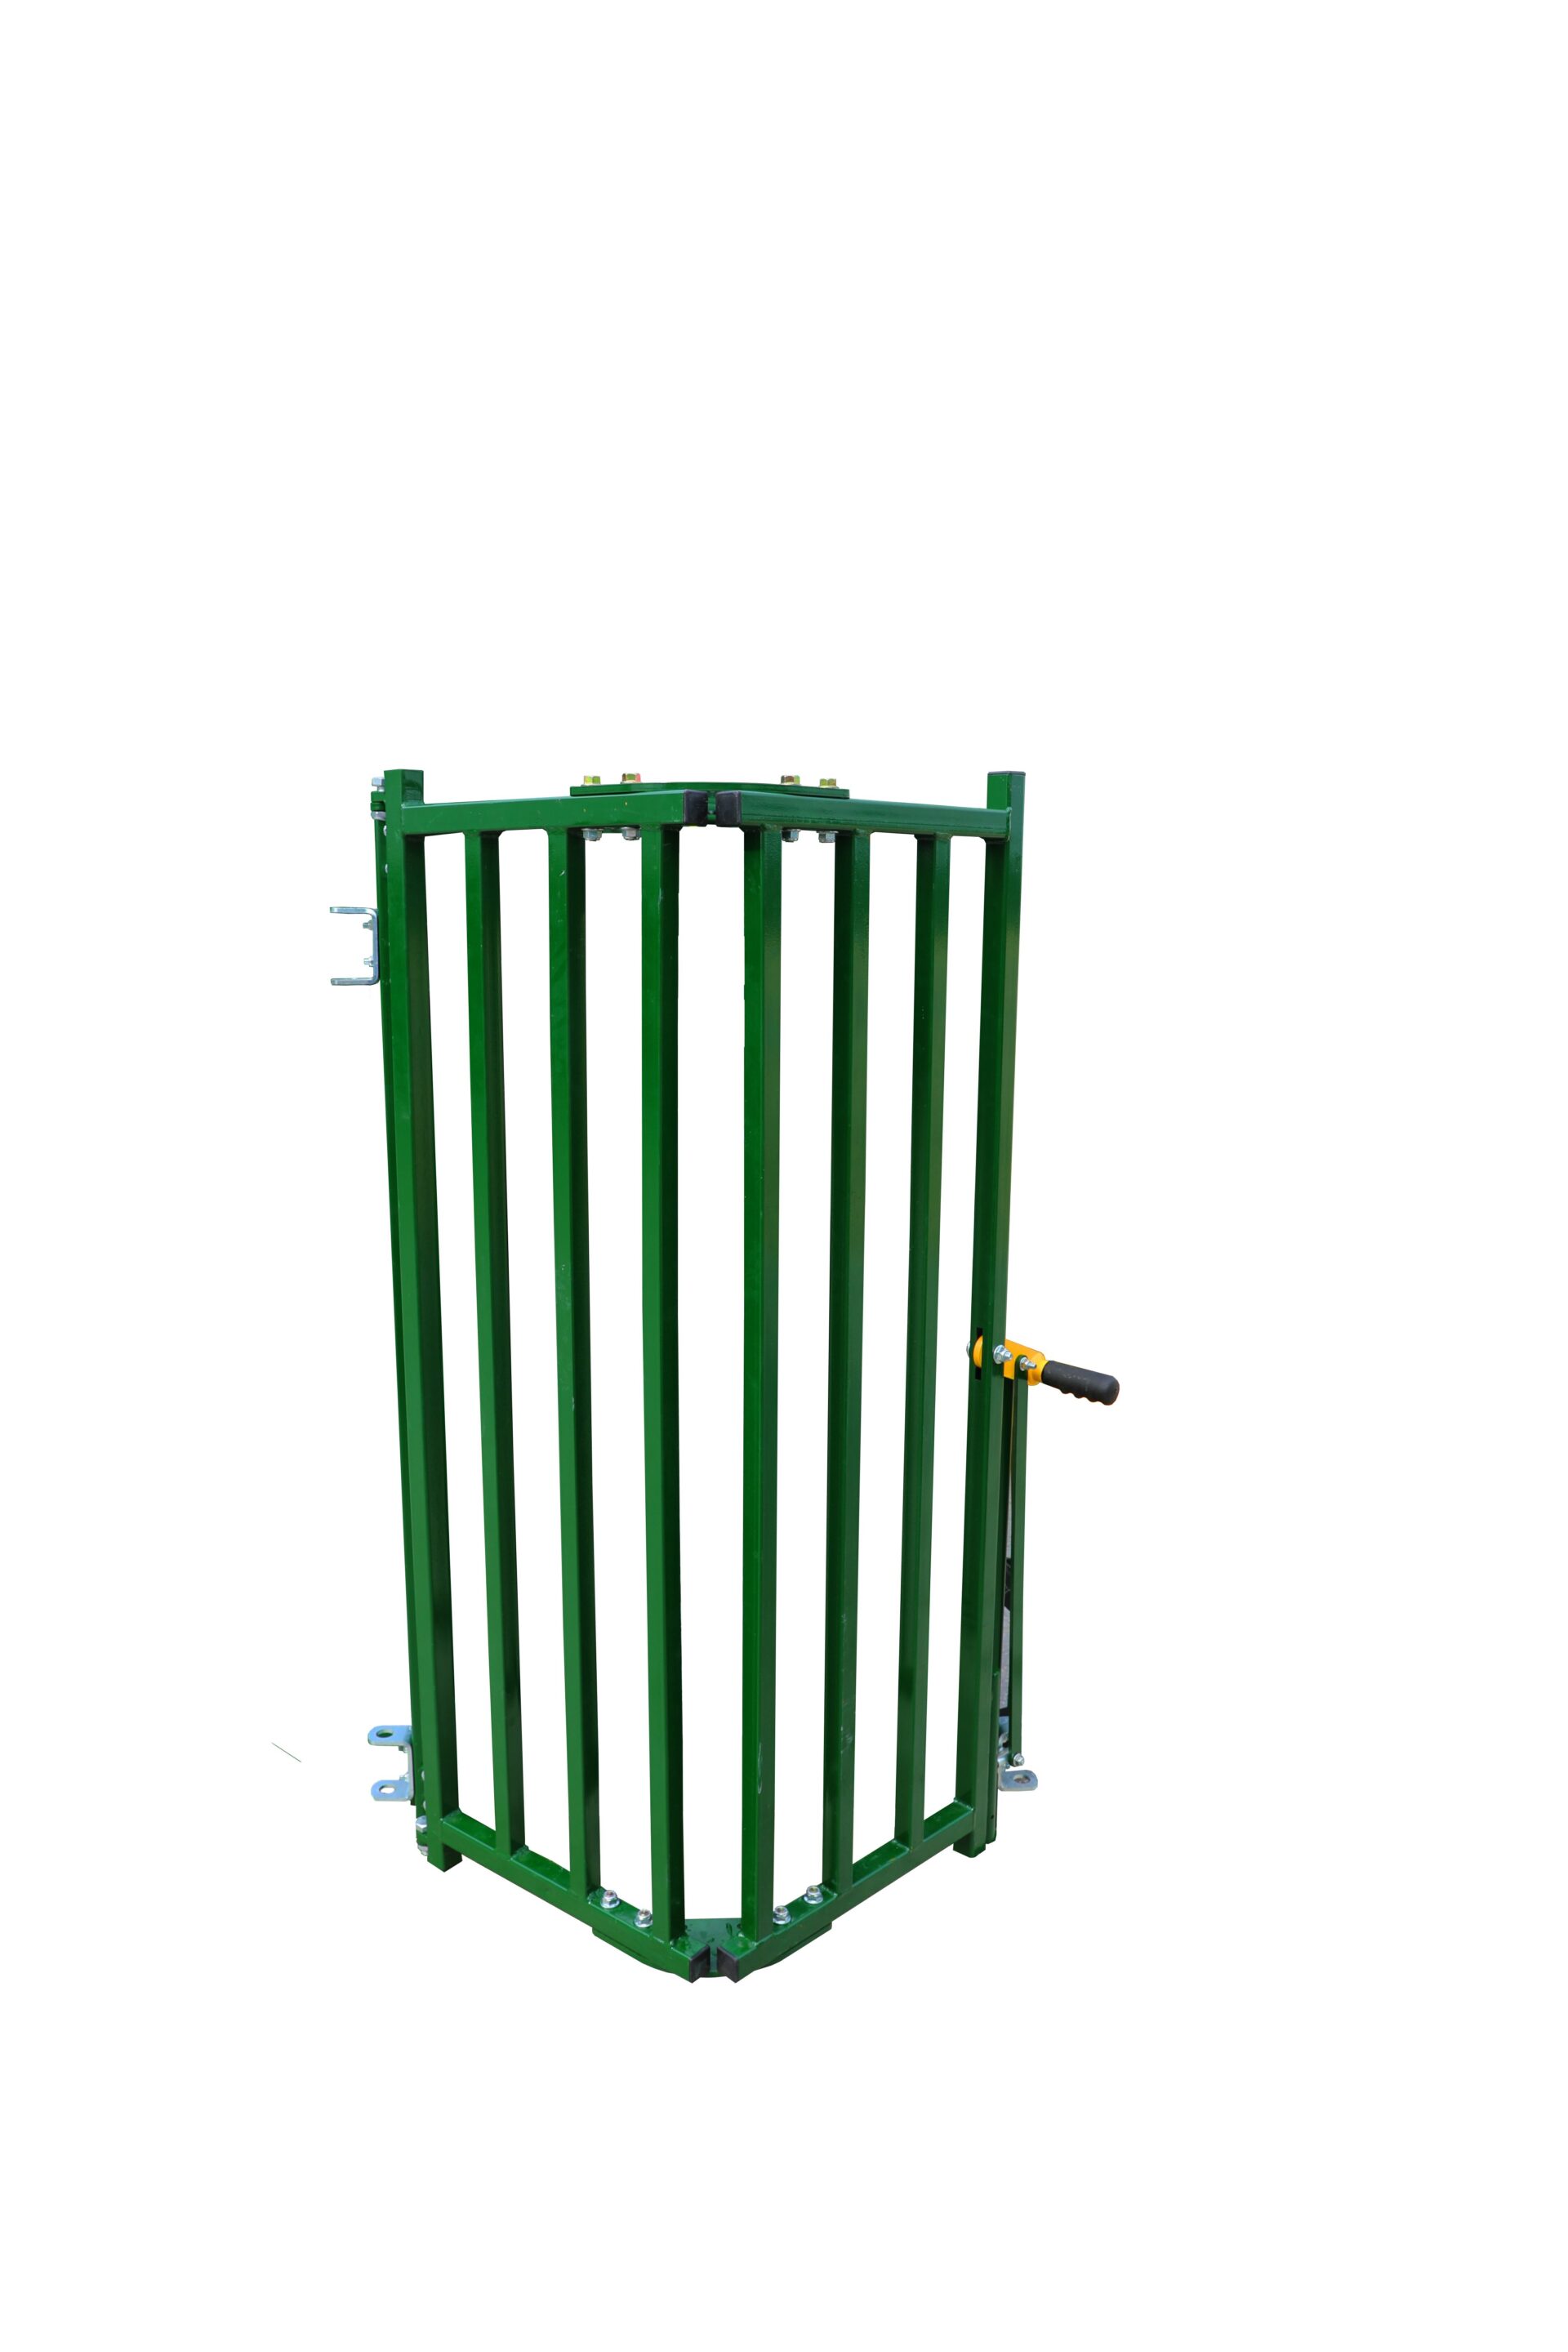 Balk Gate Option